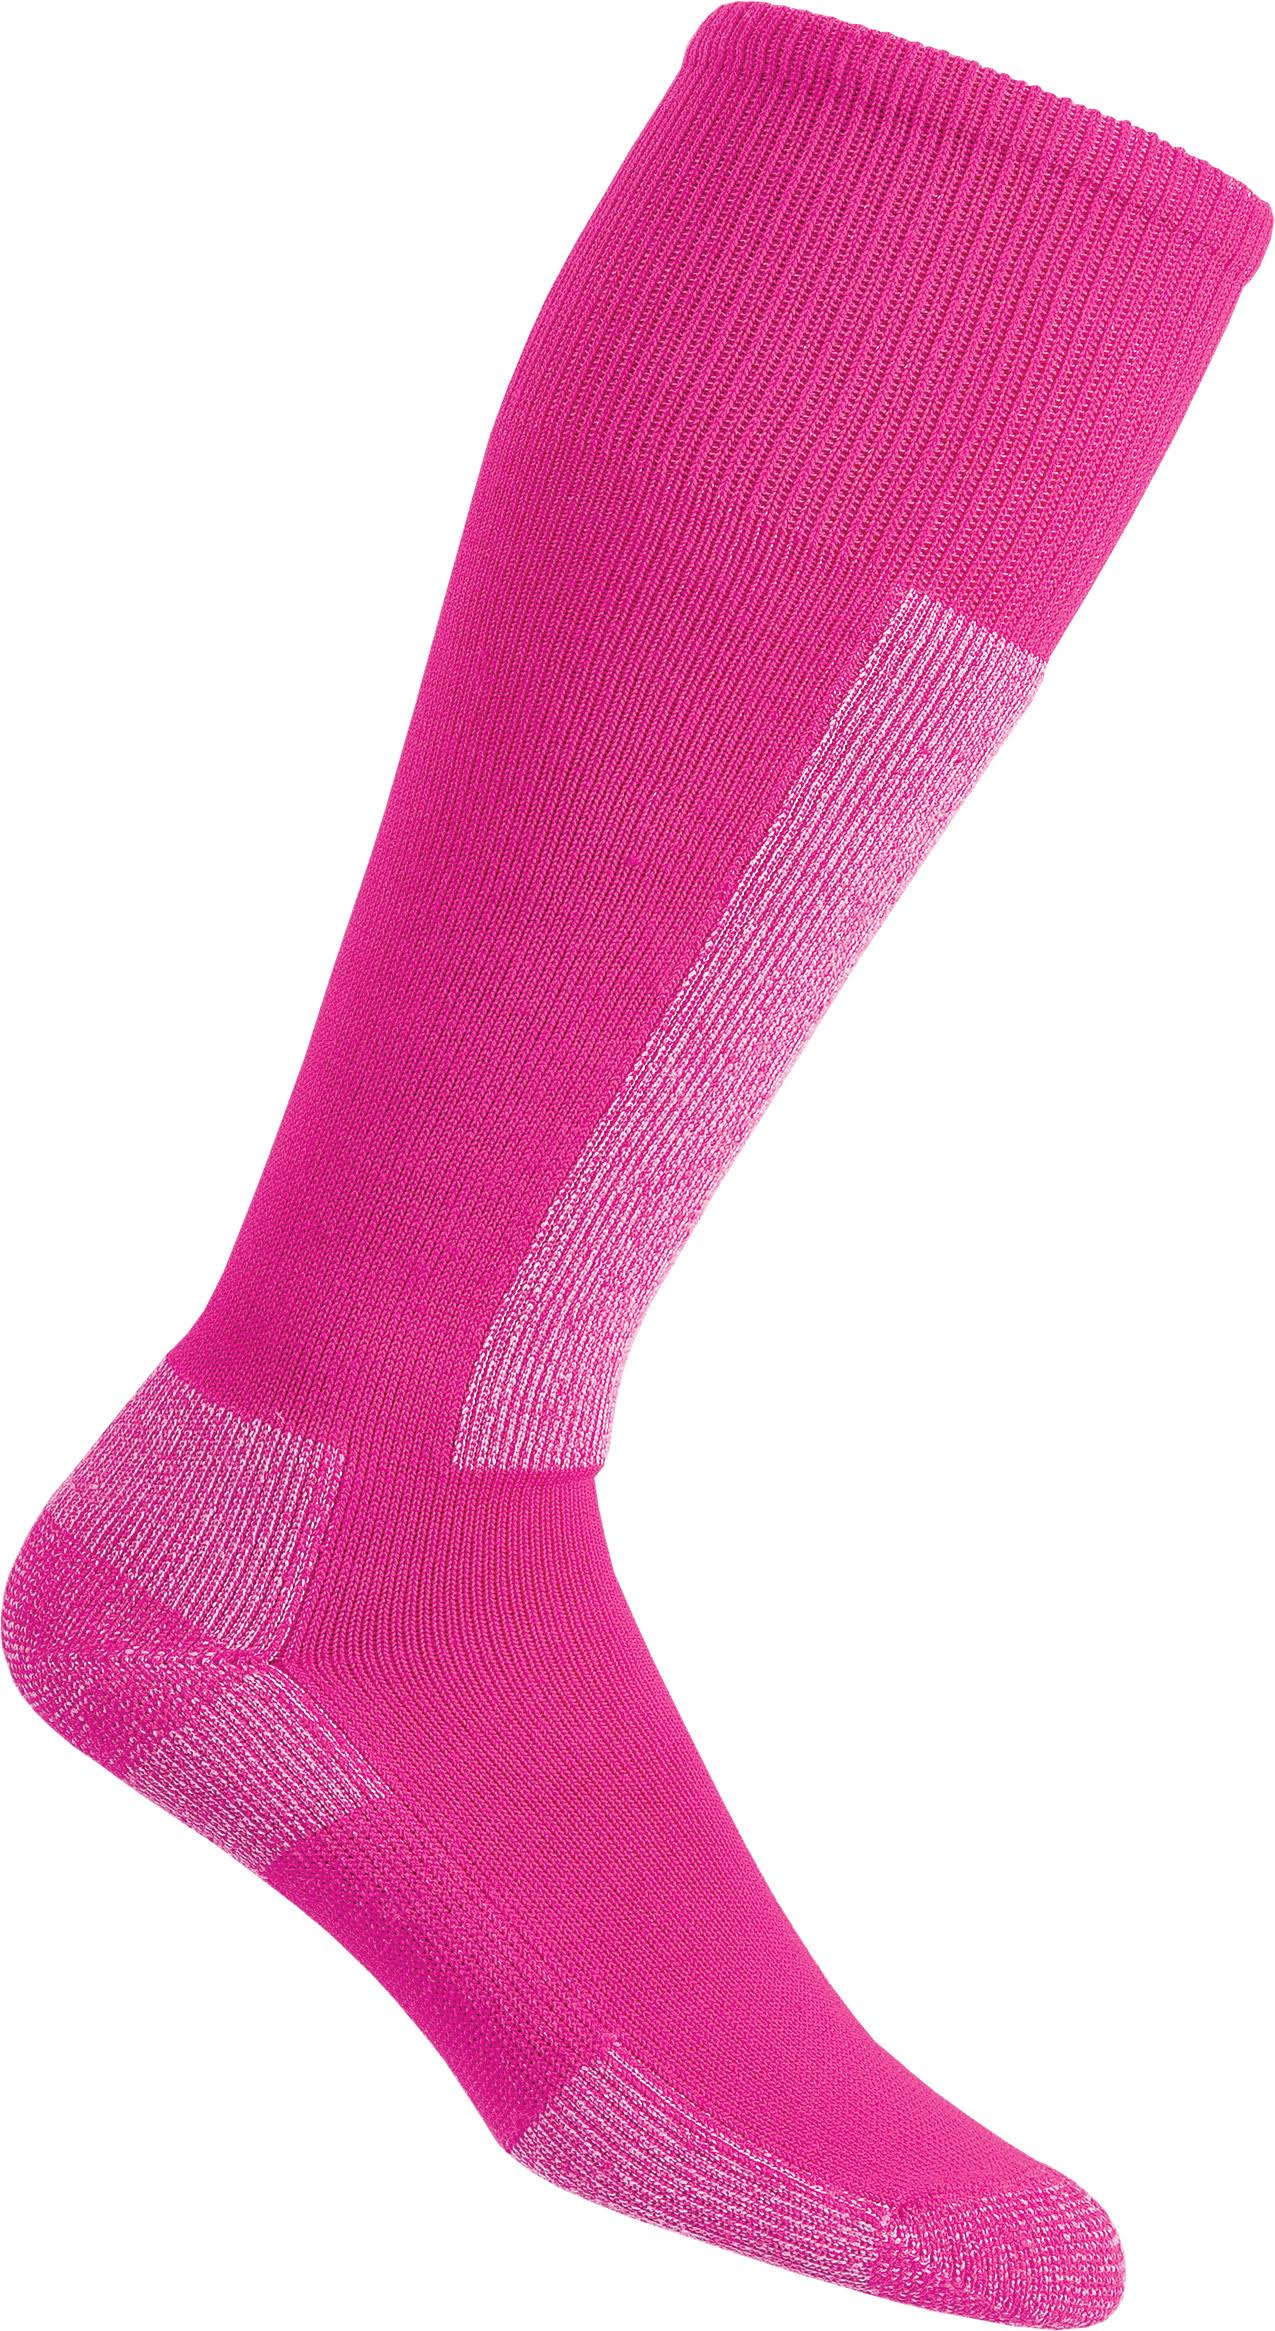 Thorlos Unisex Maximum Protection Socks - Pink